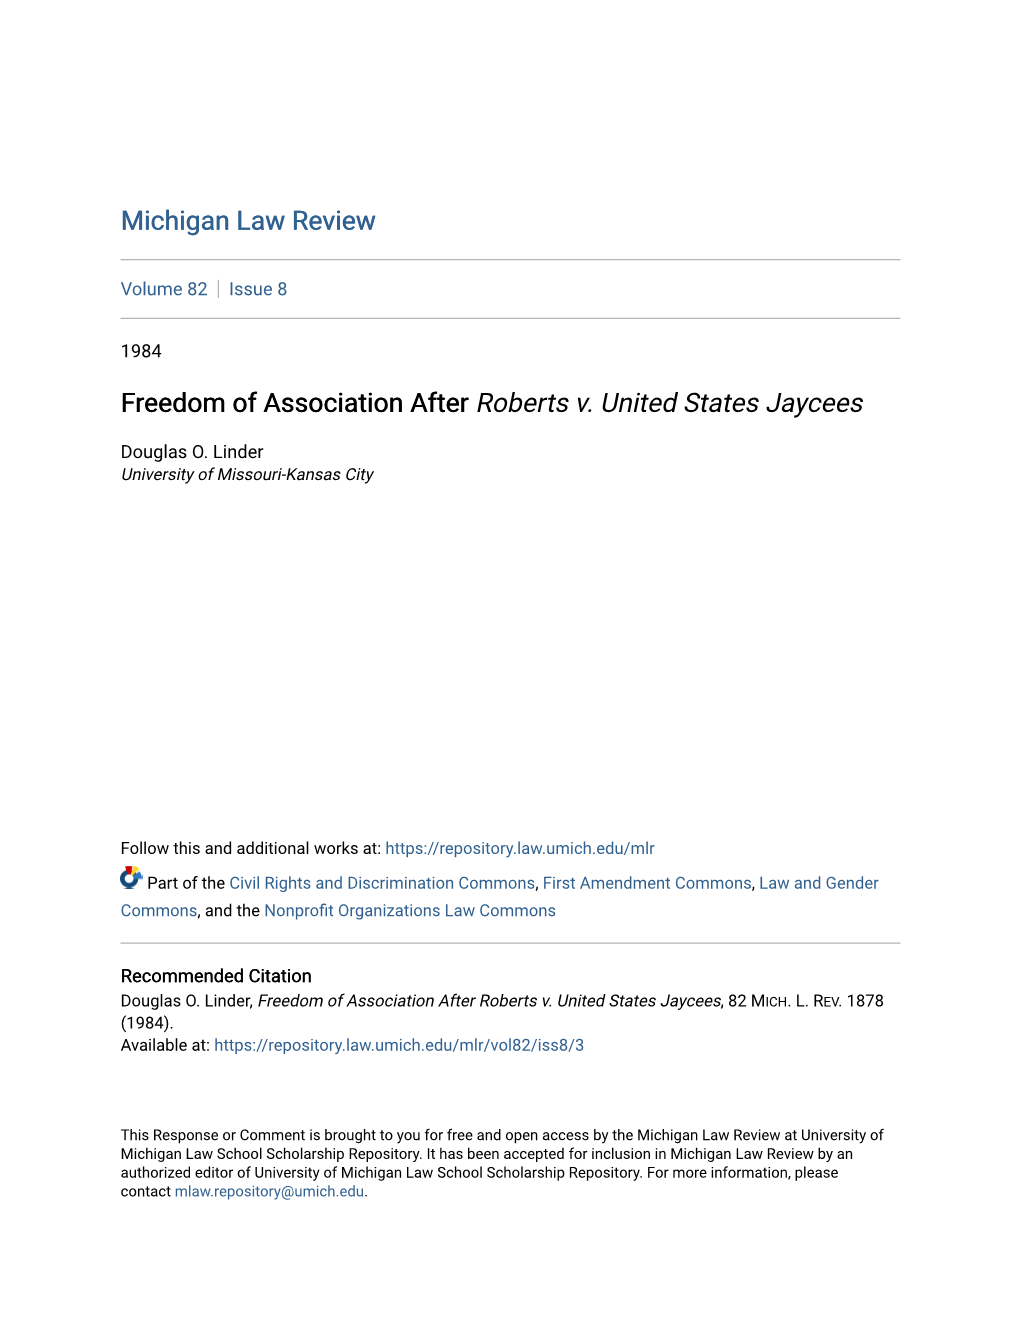 Freedom of Association After Roberts V. United States Jaycees